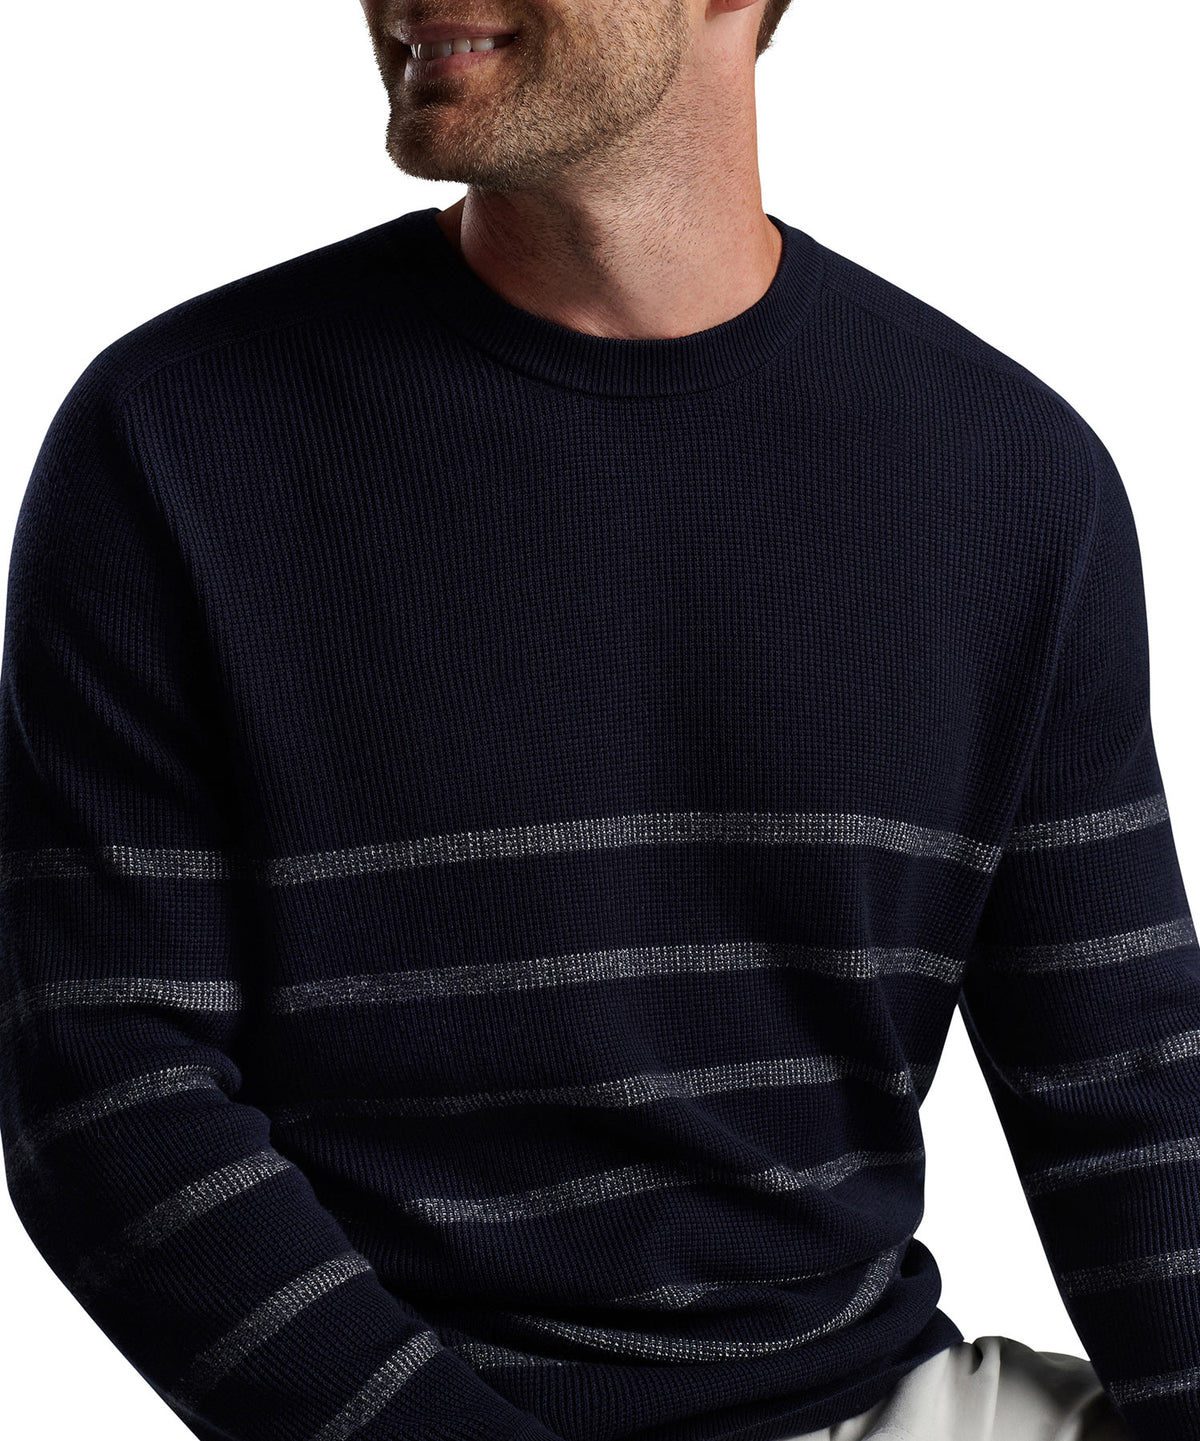 Peter Millar Sampson Crew Neck Sweater, Men's Big & Tall